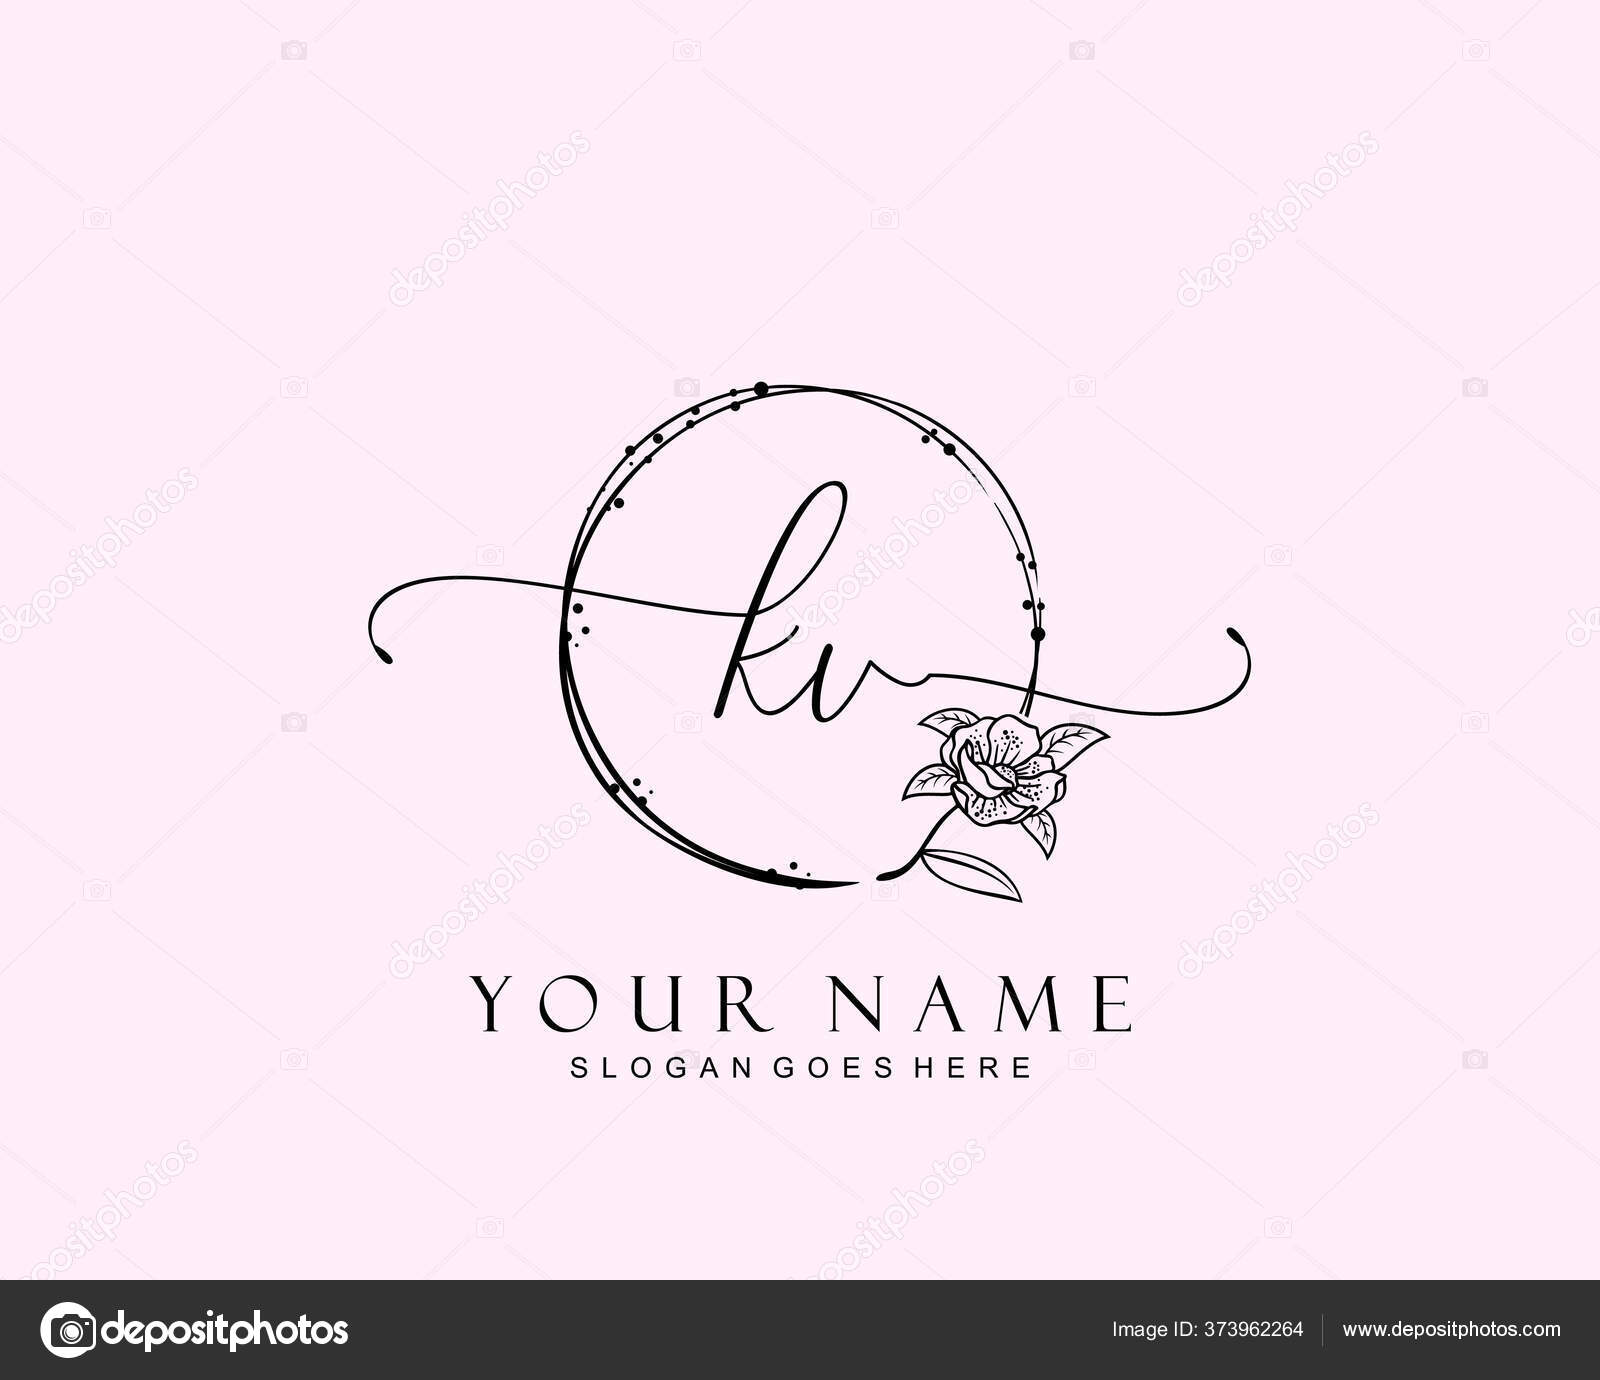 Initial Beauty Monogram Elegant Logo Design Handwriting Logo Initial  Signature Stock Vector by ©SATURDAYNIGHT_DESIGN_AND_BRANDING 371099010